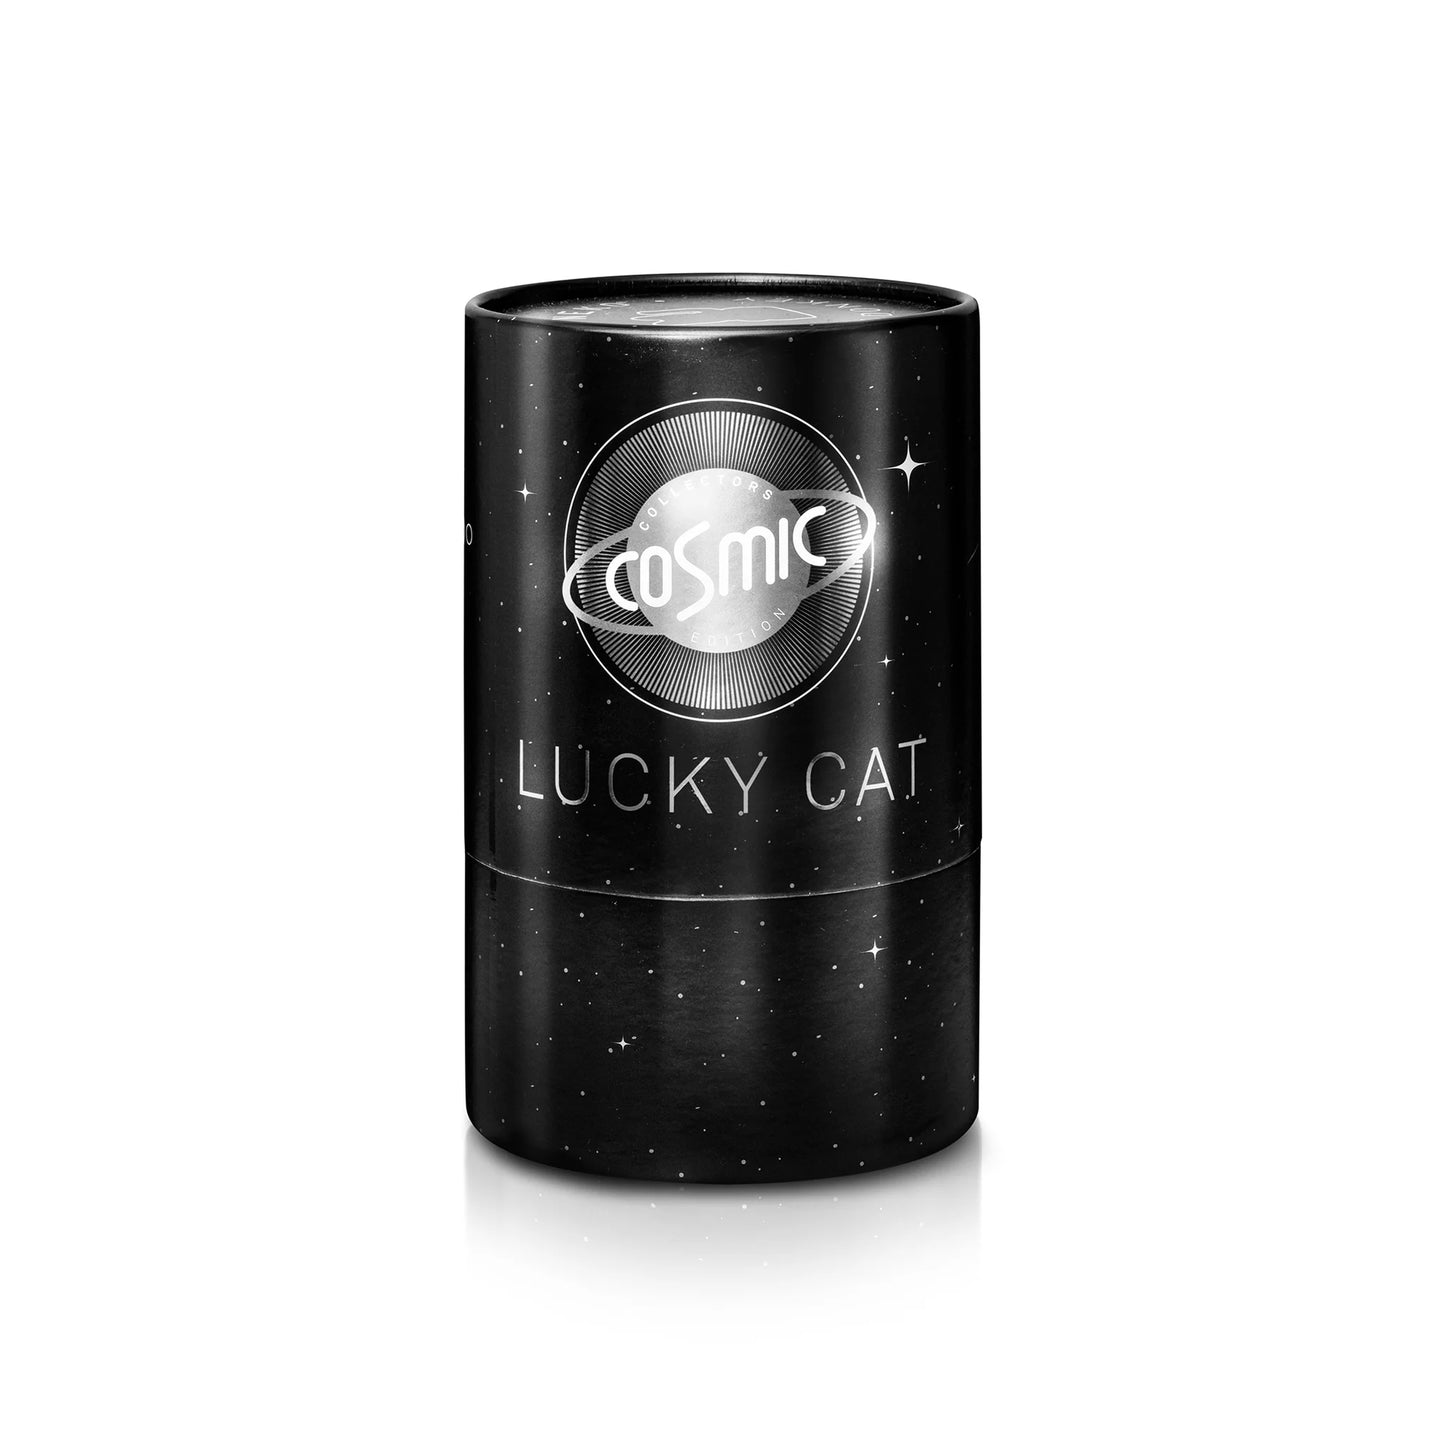 Lucky Cat Shiny Silver Cosmic Edition - Glücksplanet Merkur